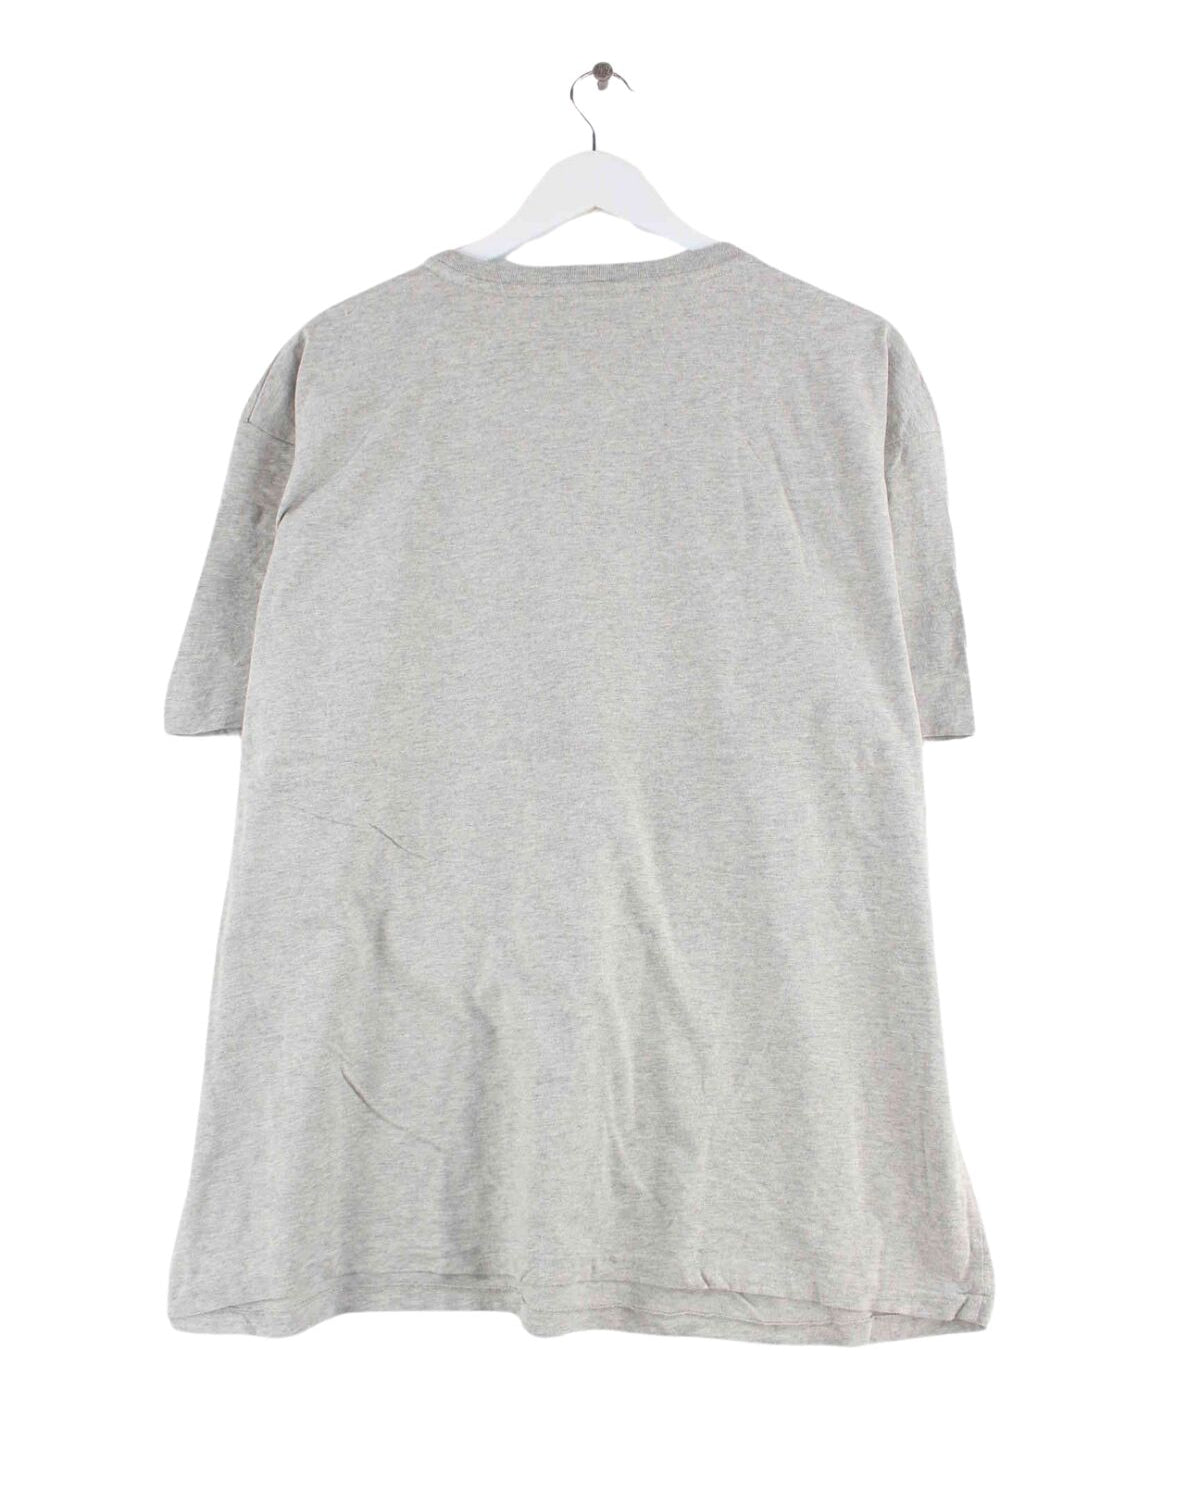 Ralph Lauren Basic T-Shirt Grau XL (back image)